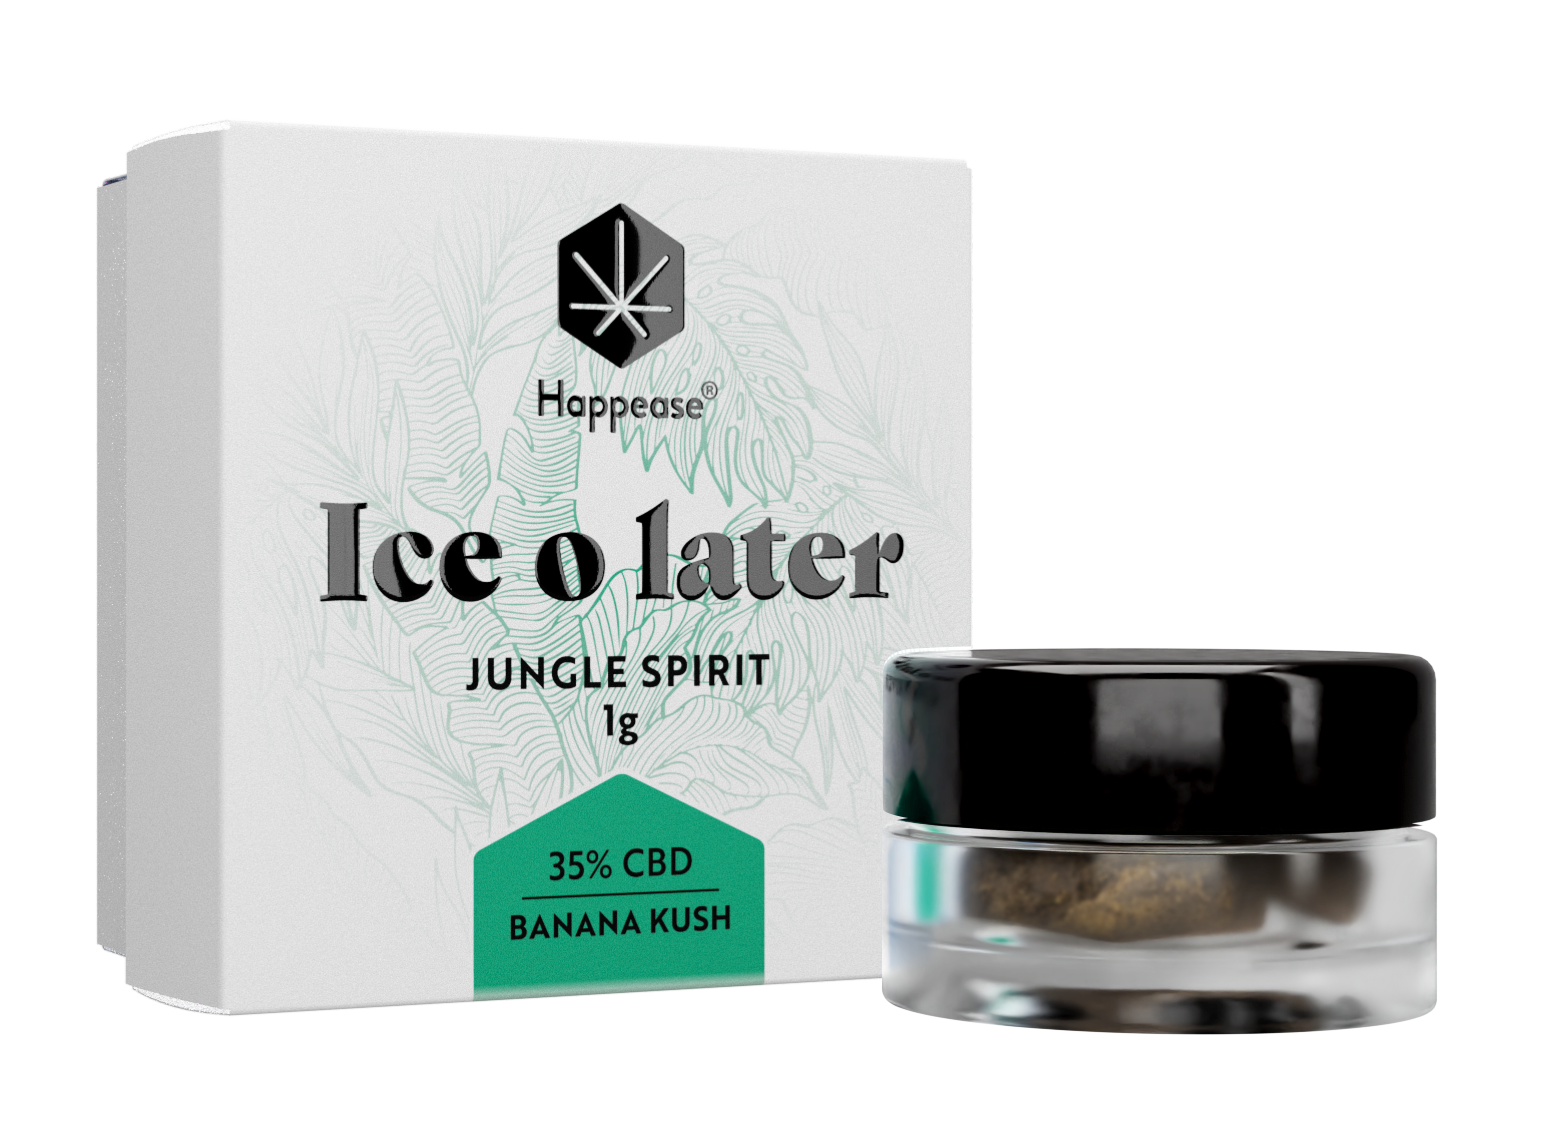 Ice o later Jungle Spirit - Hash CBD